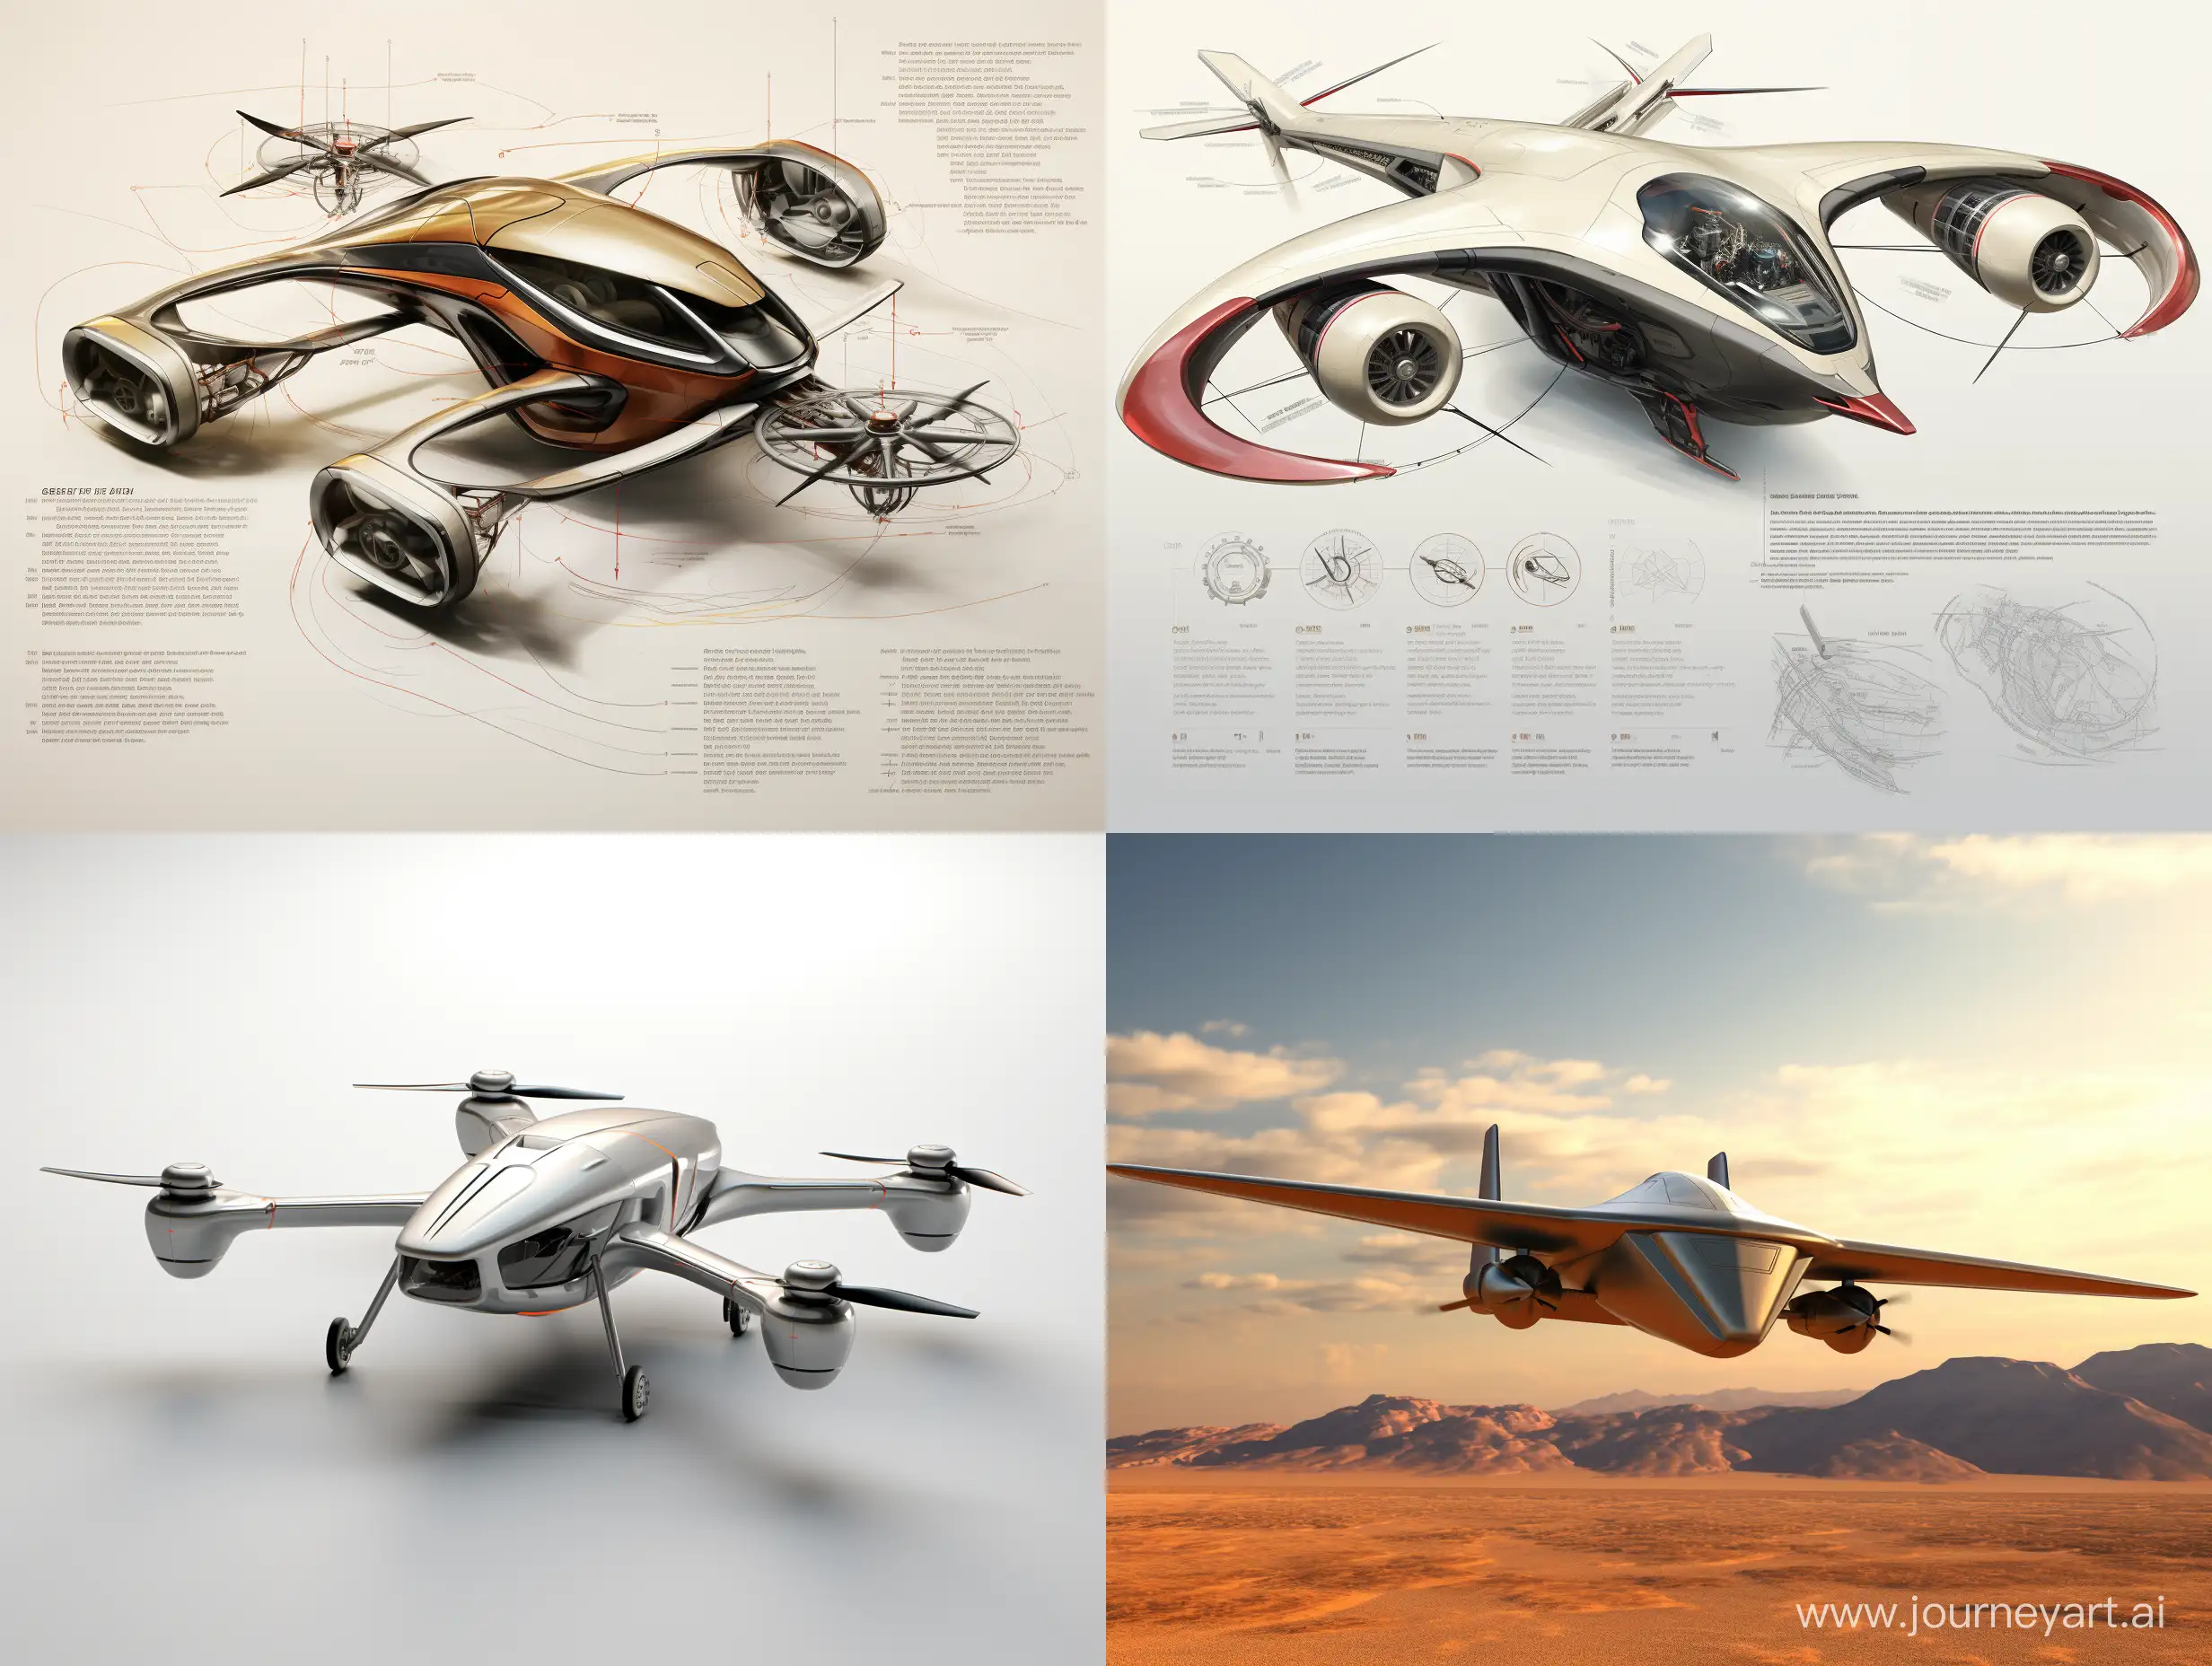 Futuristic-43-Aspect-Ratio-Unmanned-Aerial-Vehicle-Design